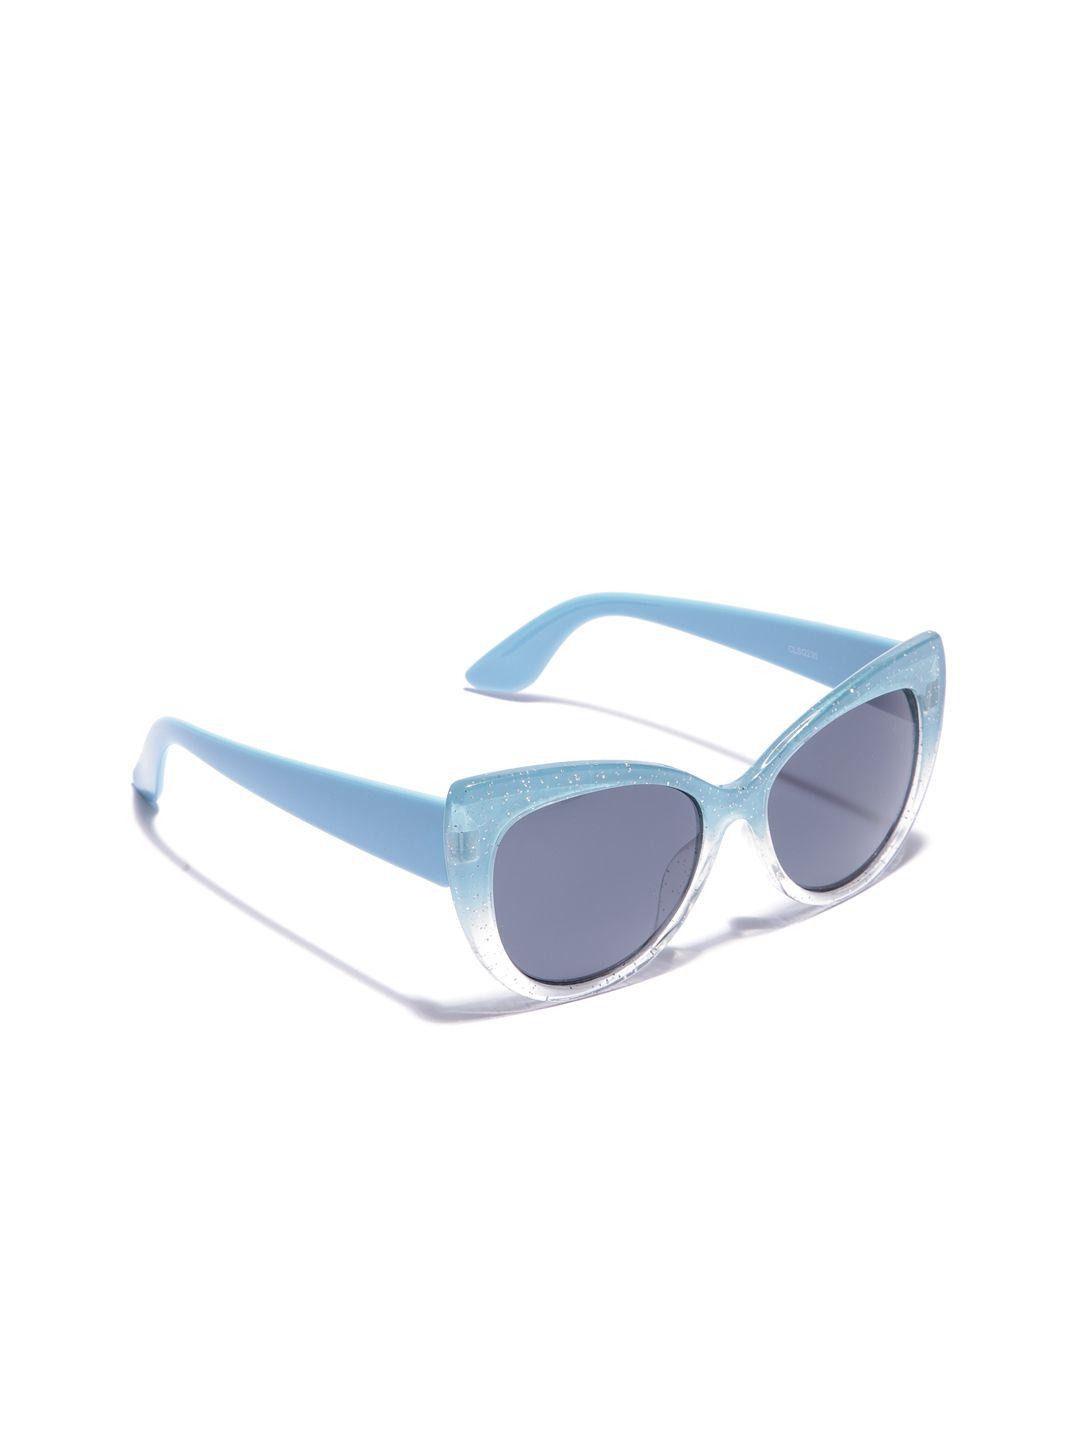 carlton london girls grey lens & blue cateye sunglasses with uv protected lens clsg235